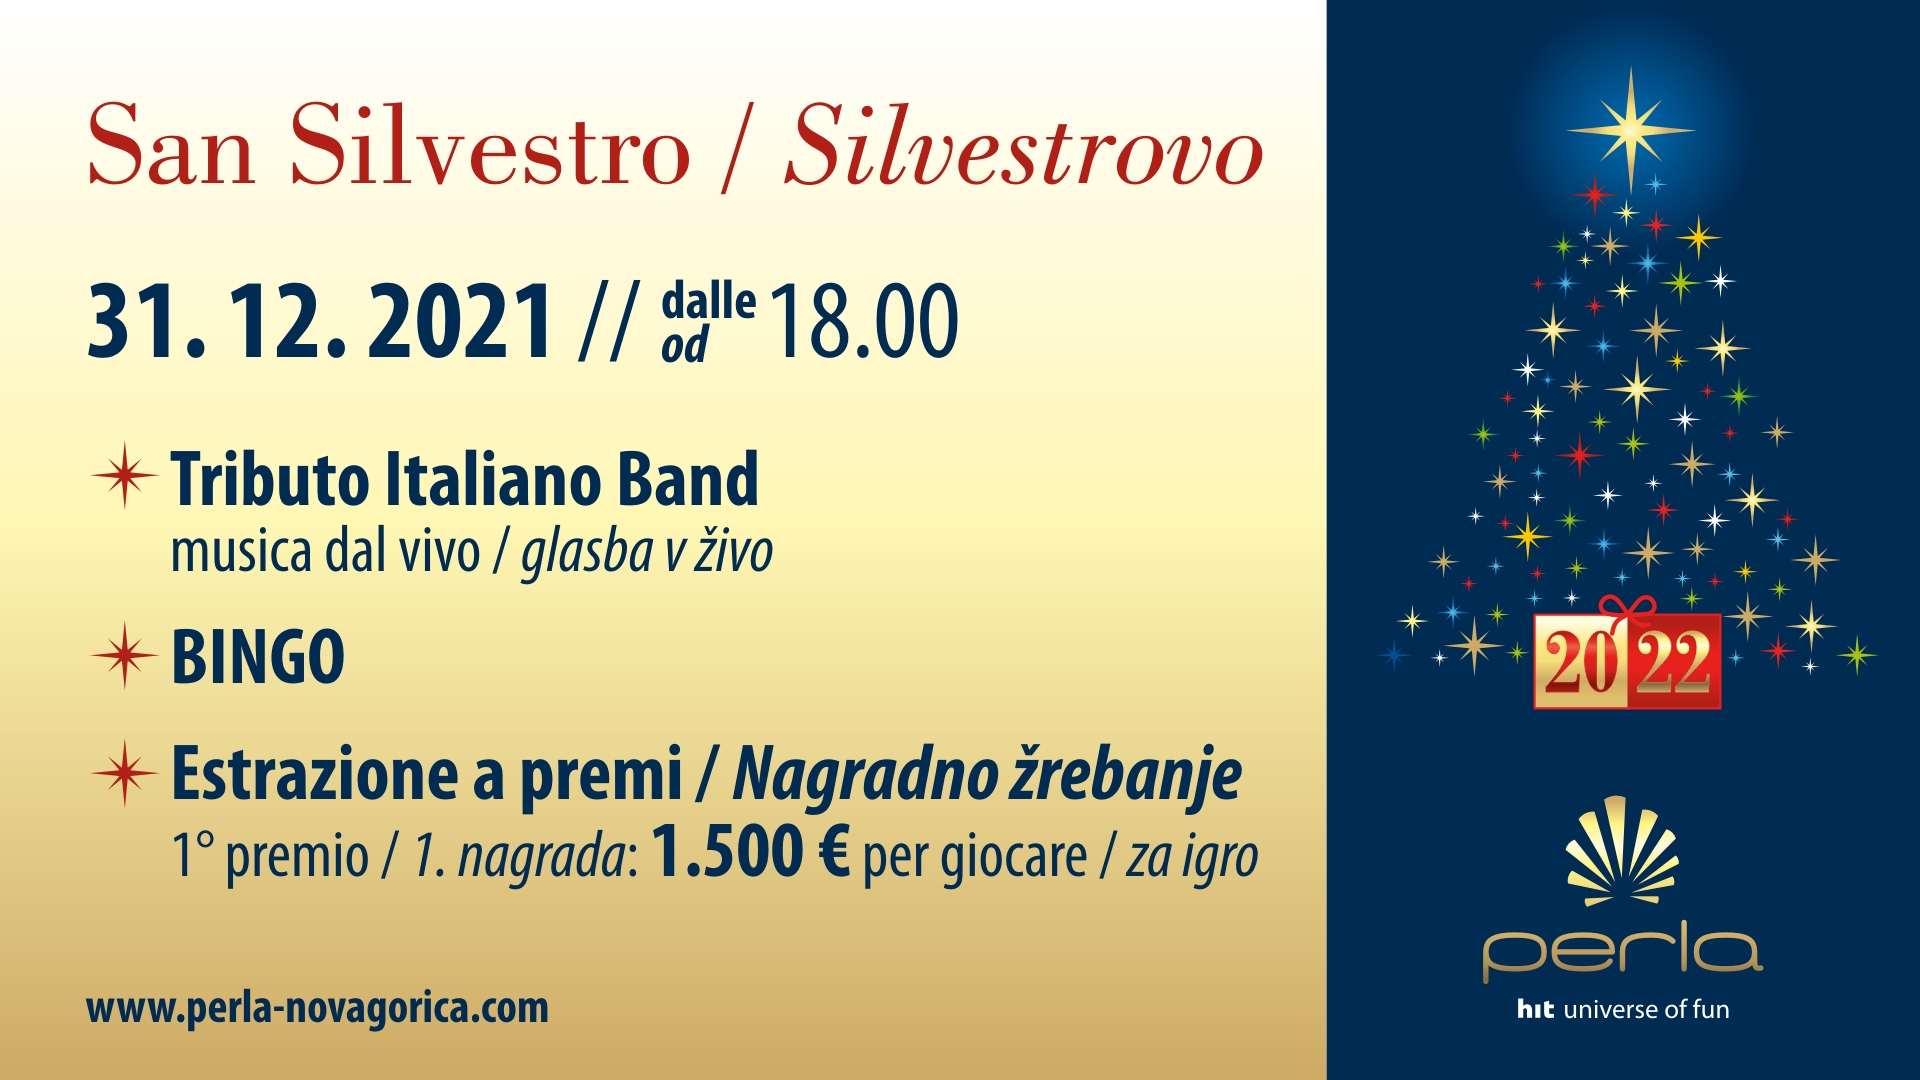 SILVESTROVO / SAN SILVESTRO / NEW YEAR'S EVE - EventiFVG.it